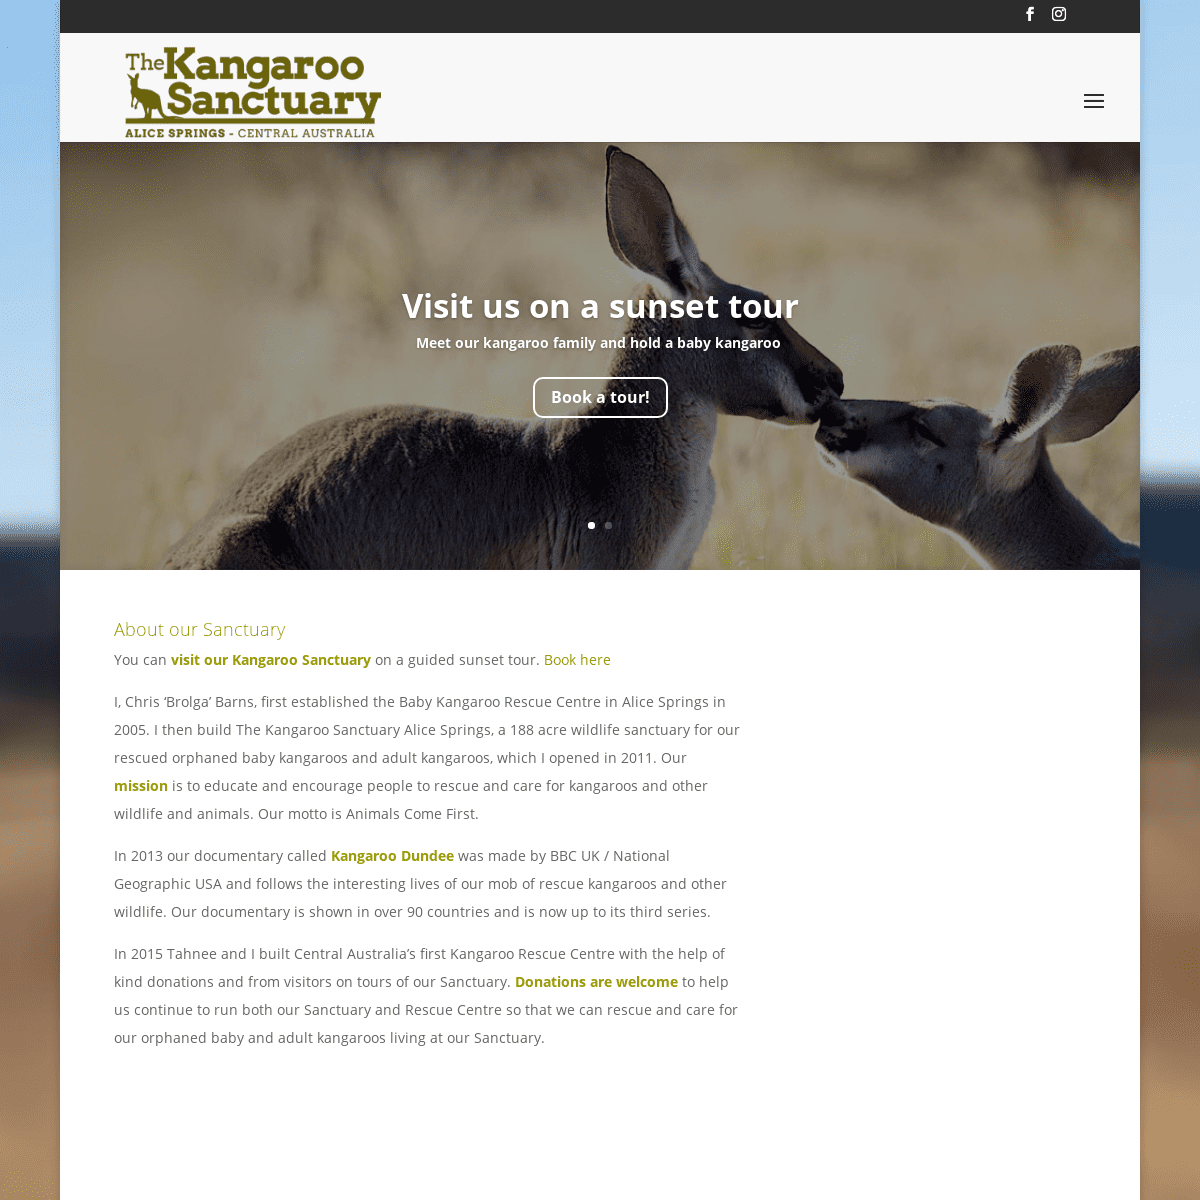 A complete backup of https://kangaroosanctuary.com